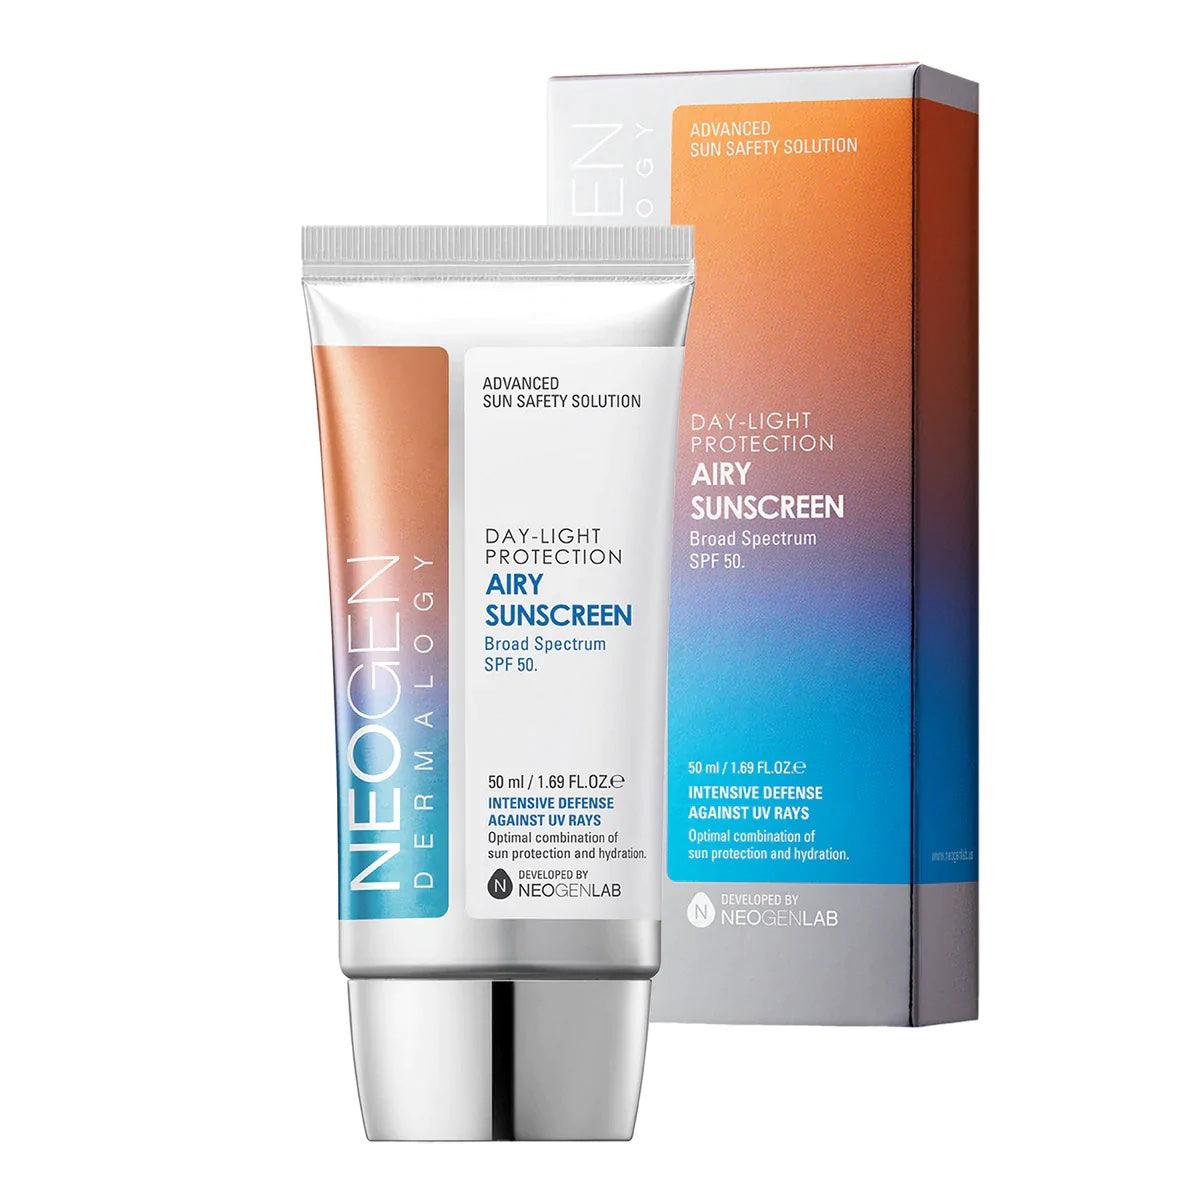 Day-light protection Airy Sunscreen SPF 50+ - 50 ml - K-Beauty Arabia